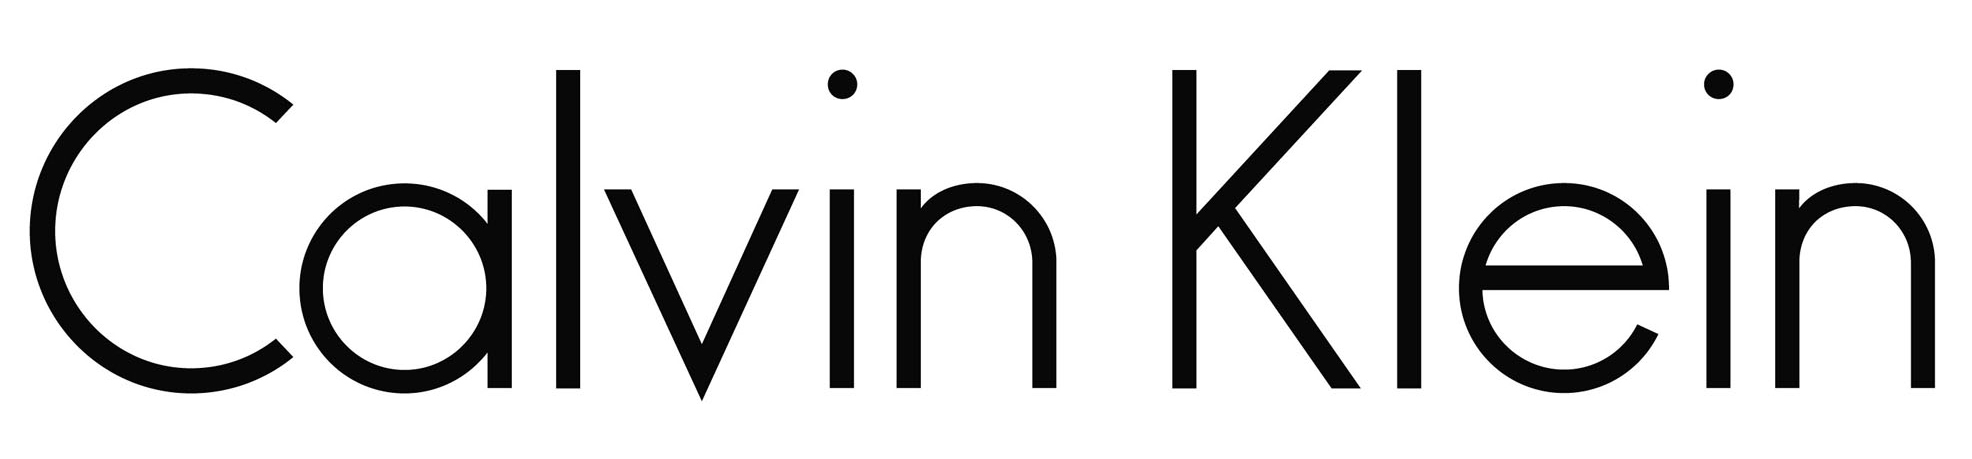 Calvin Klein, Inc. Announces the Appointment of Raf Simons.